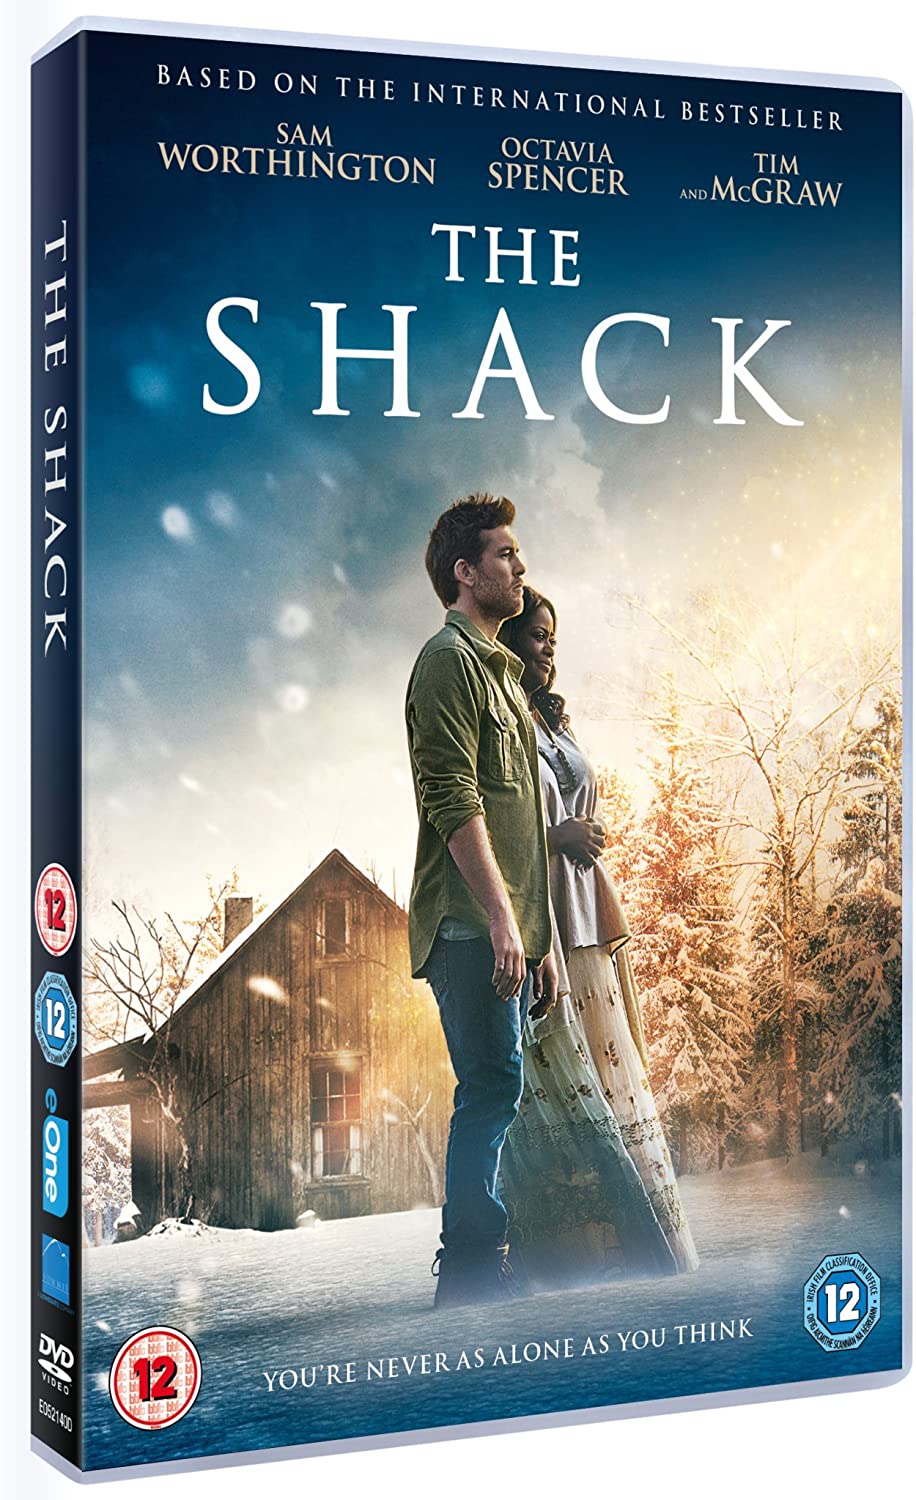 The Shack - Drama/Fantasy [DVD]